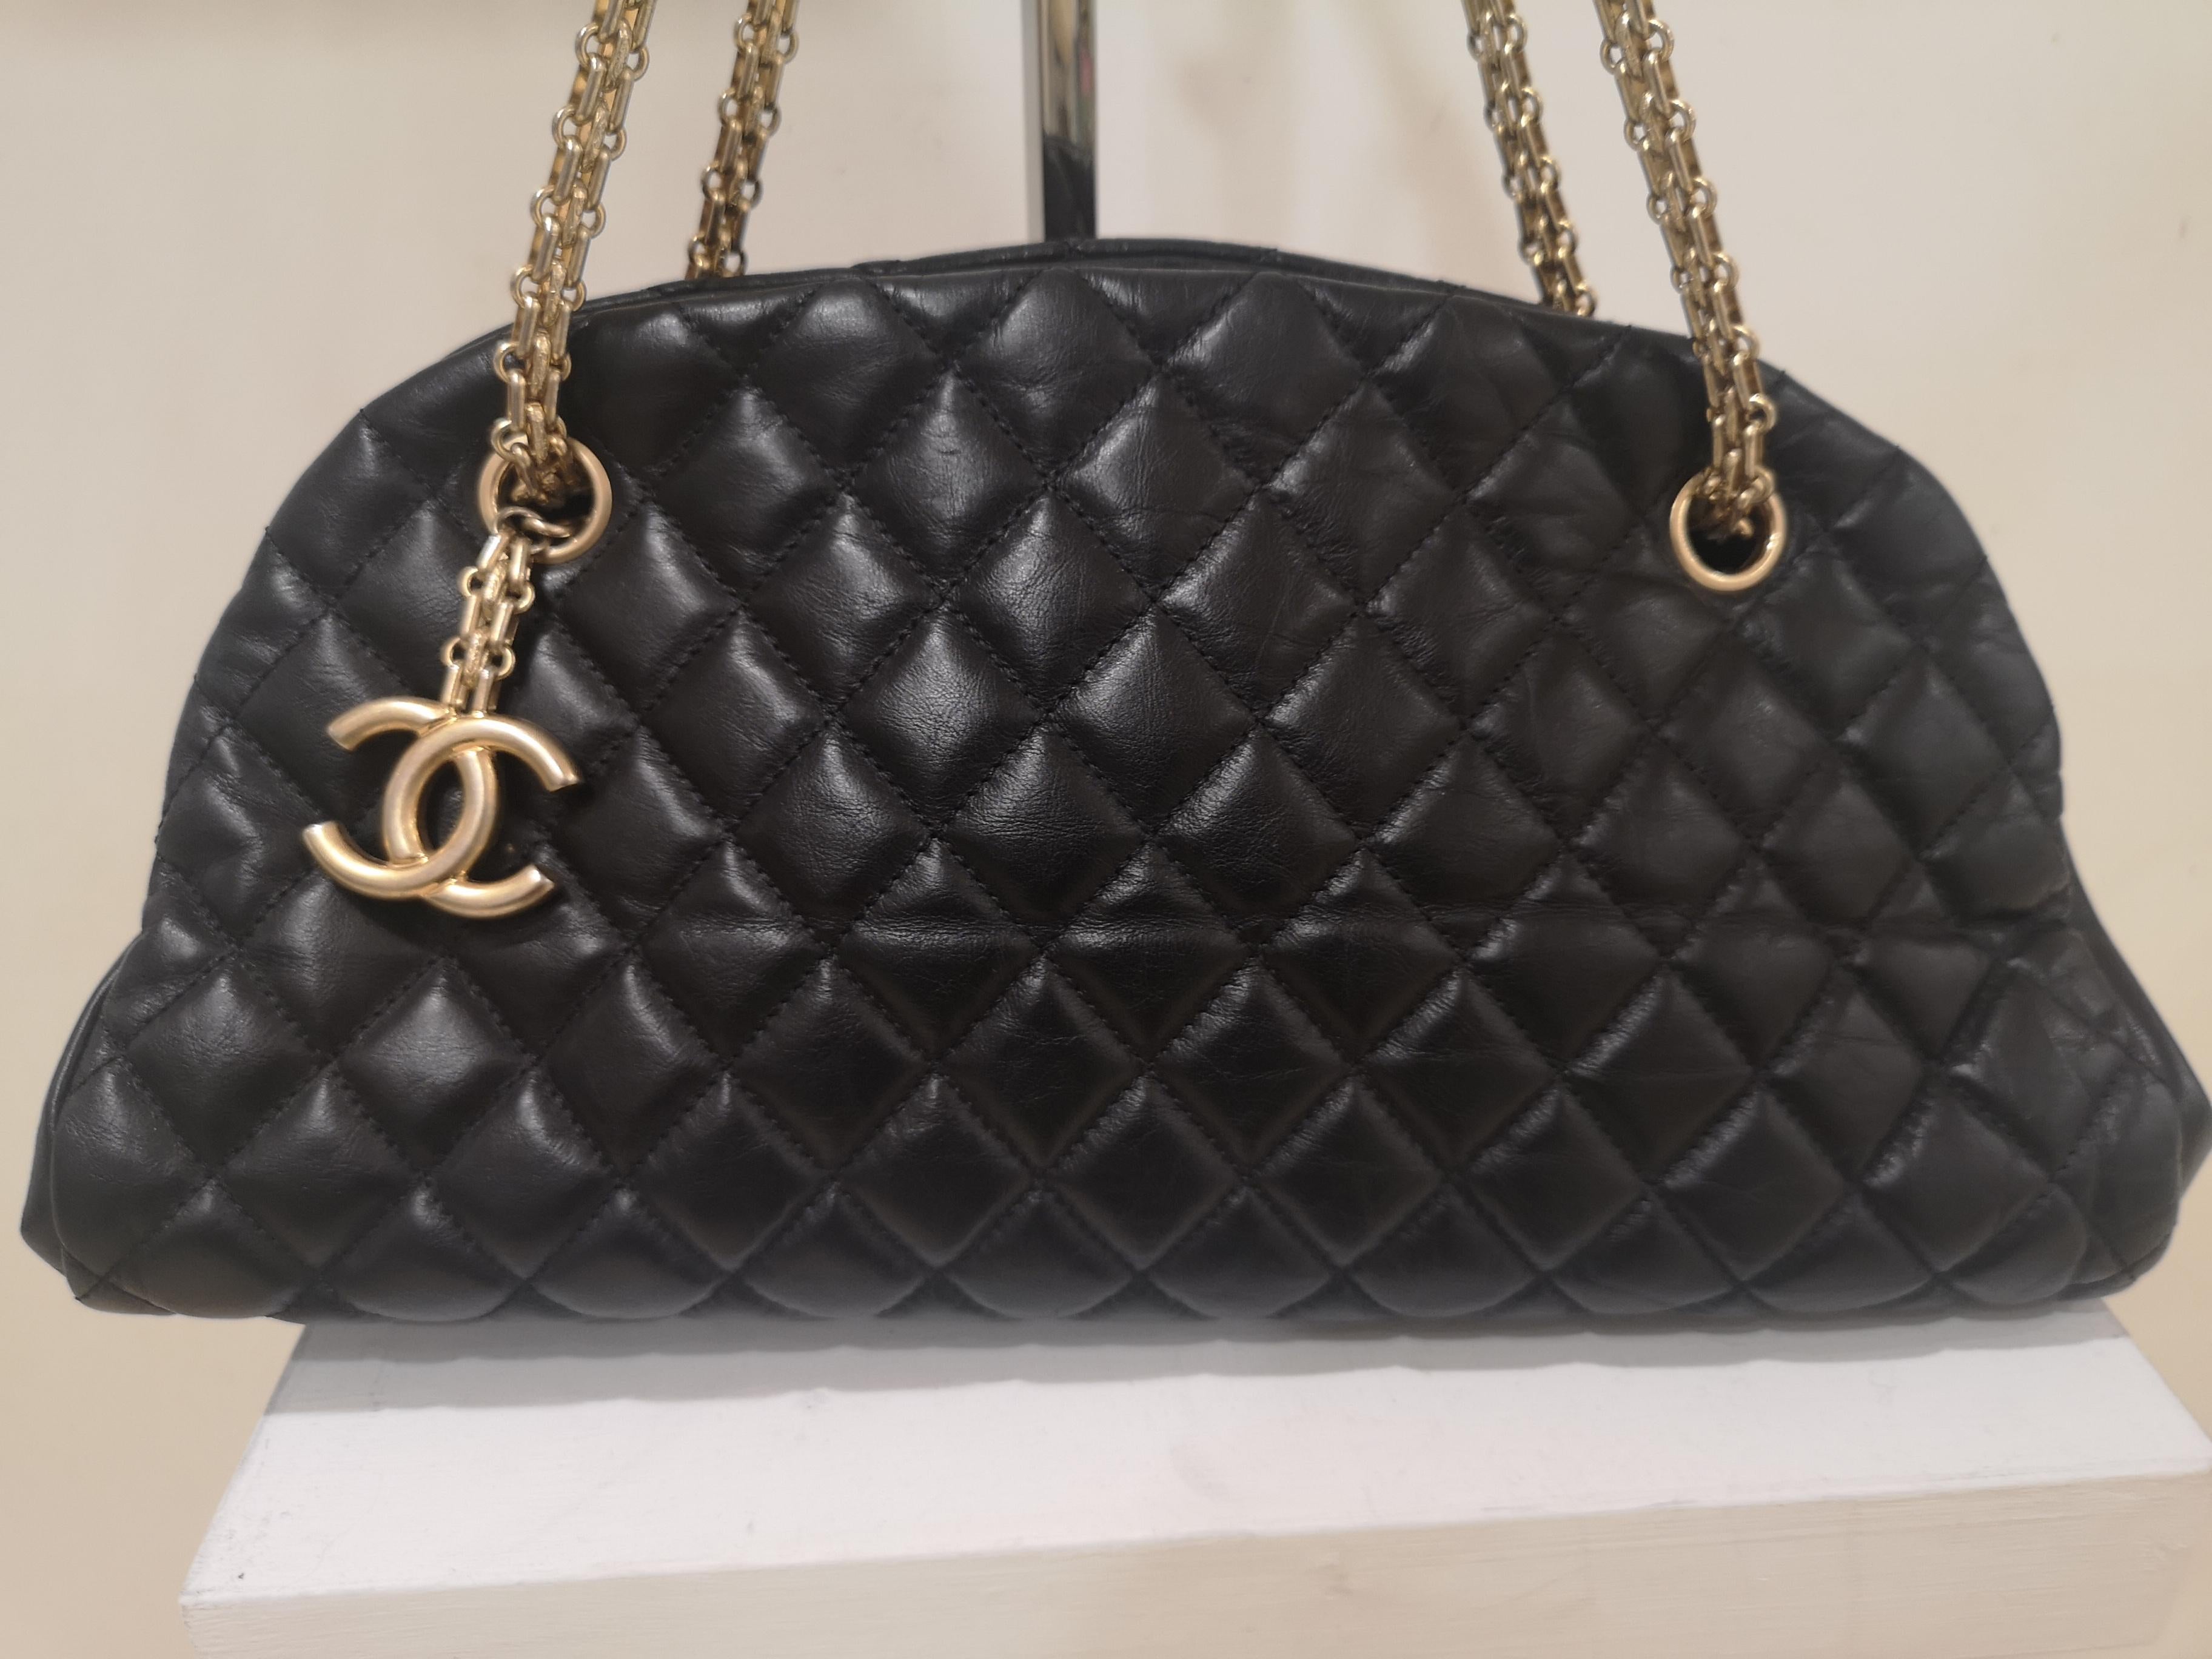 Chanel mademoiselle black leather shoulder bag
Chanel black leather handbag with gold tone shoulder strap and CC logo on the front
Measurements: 
Width: 34 cm
Height: 16 cm
Depth: 16 cm